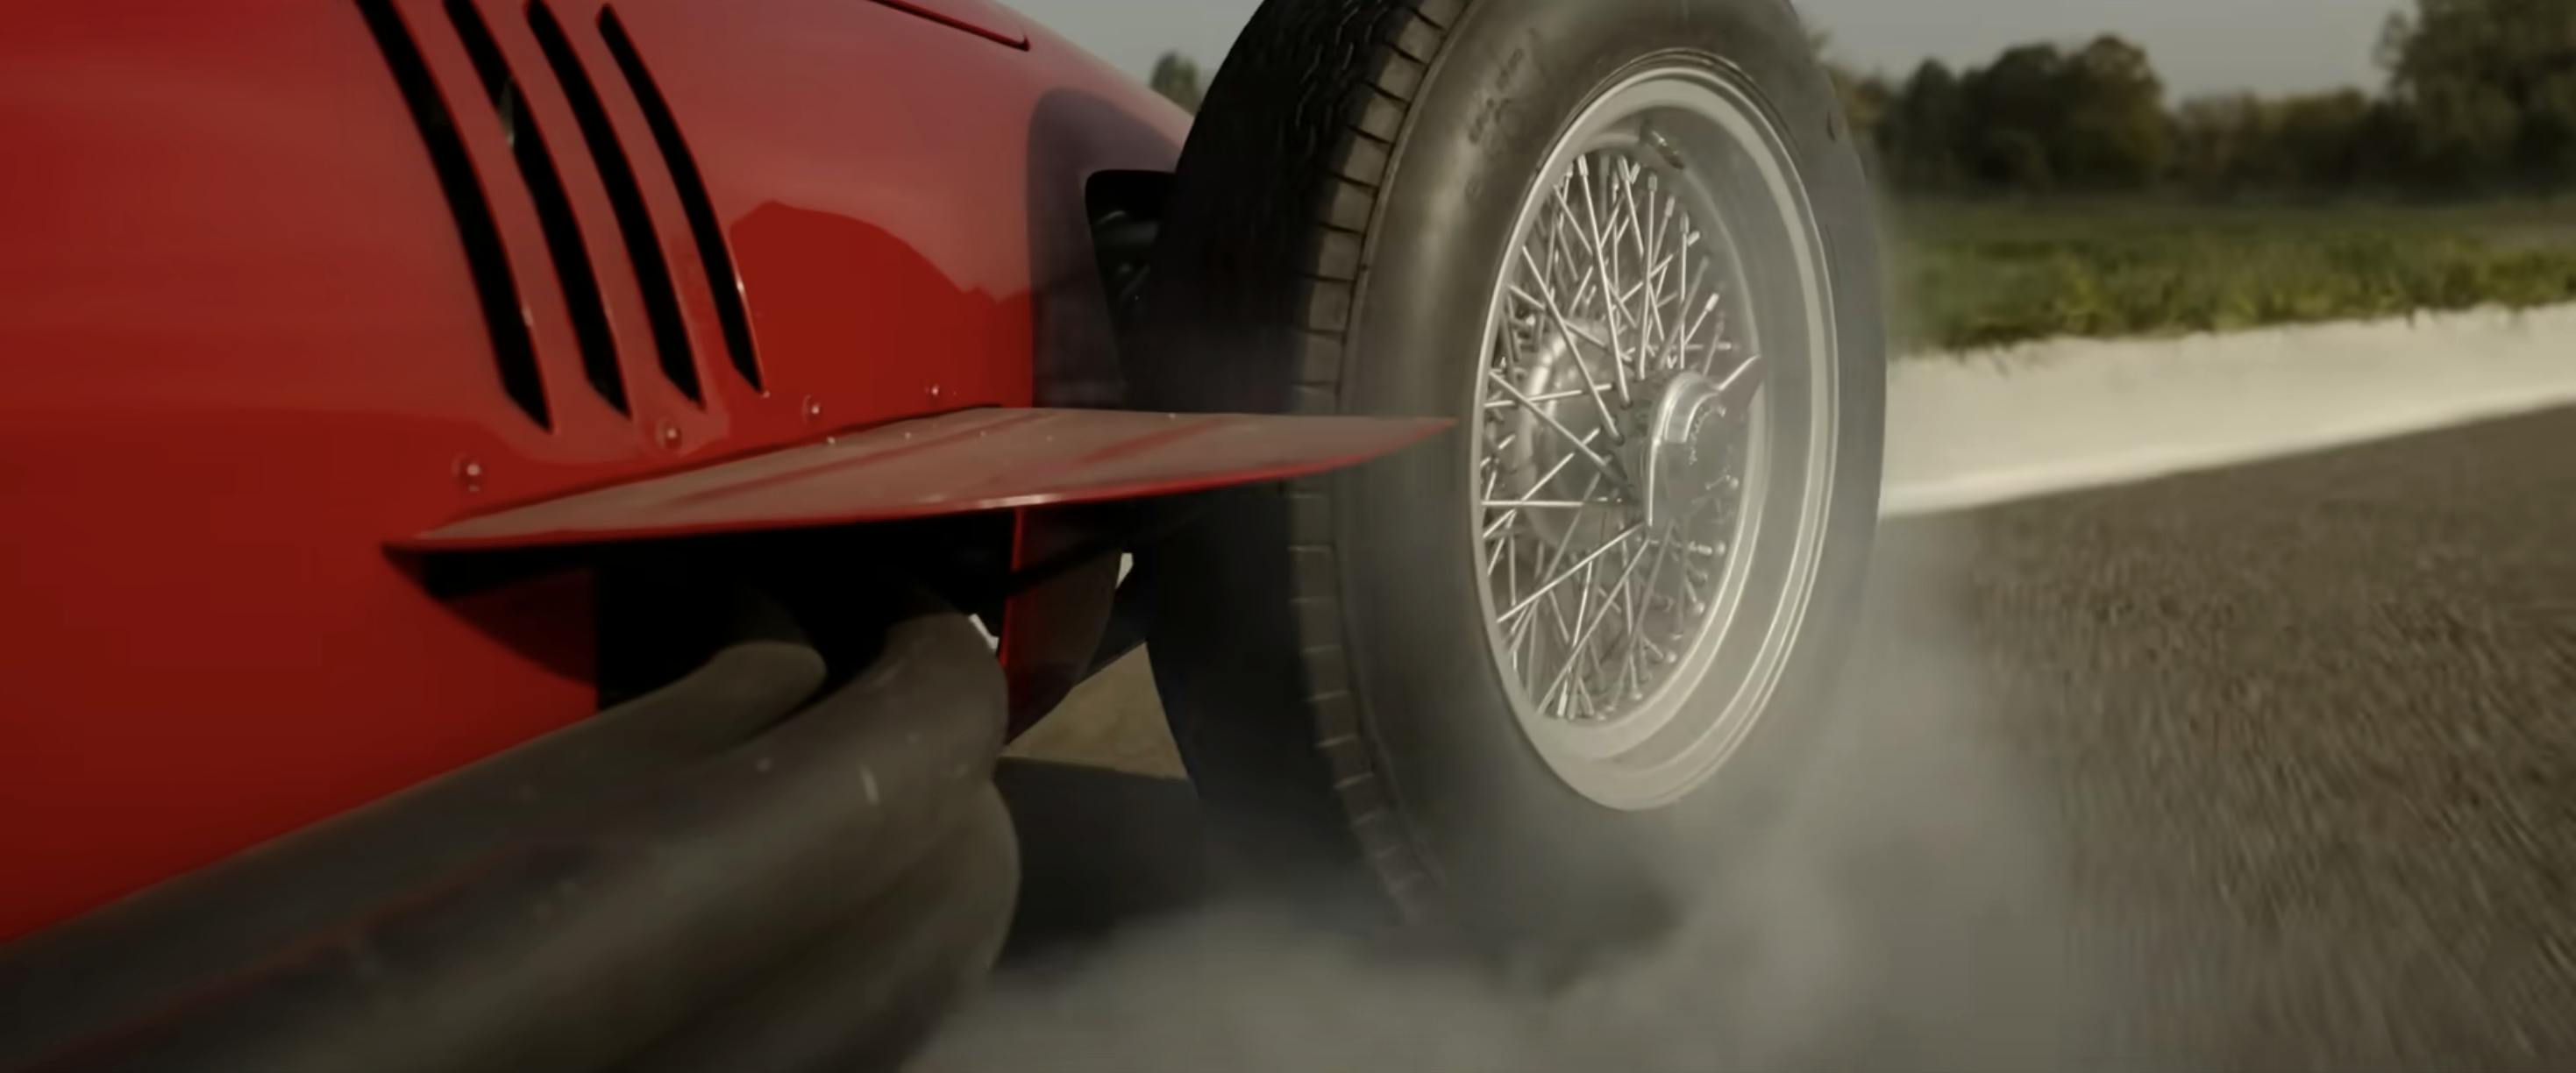 Ferrari film racing action still wheel aero pipes closeup